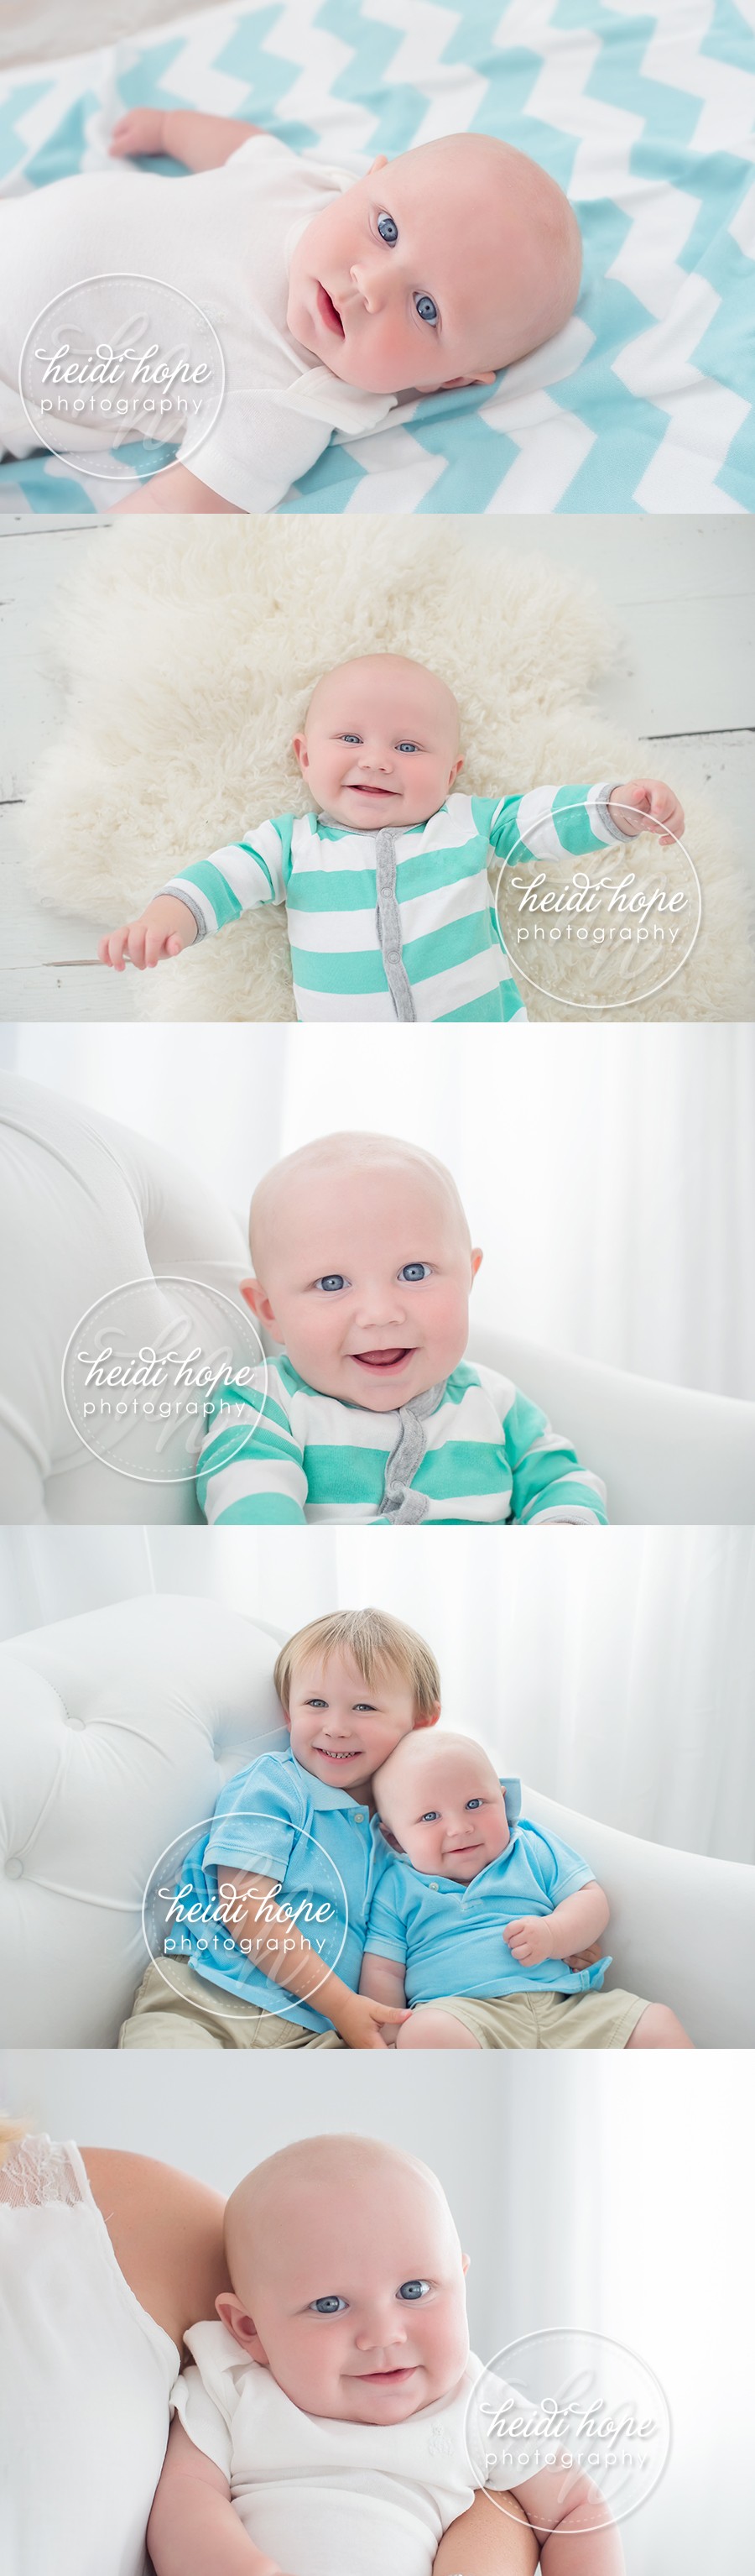 4 month old baby boy studio portraits